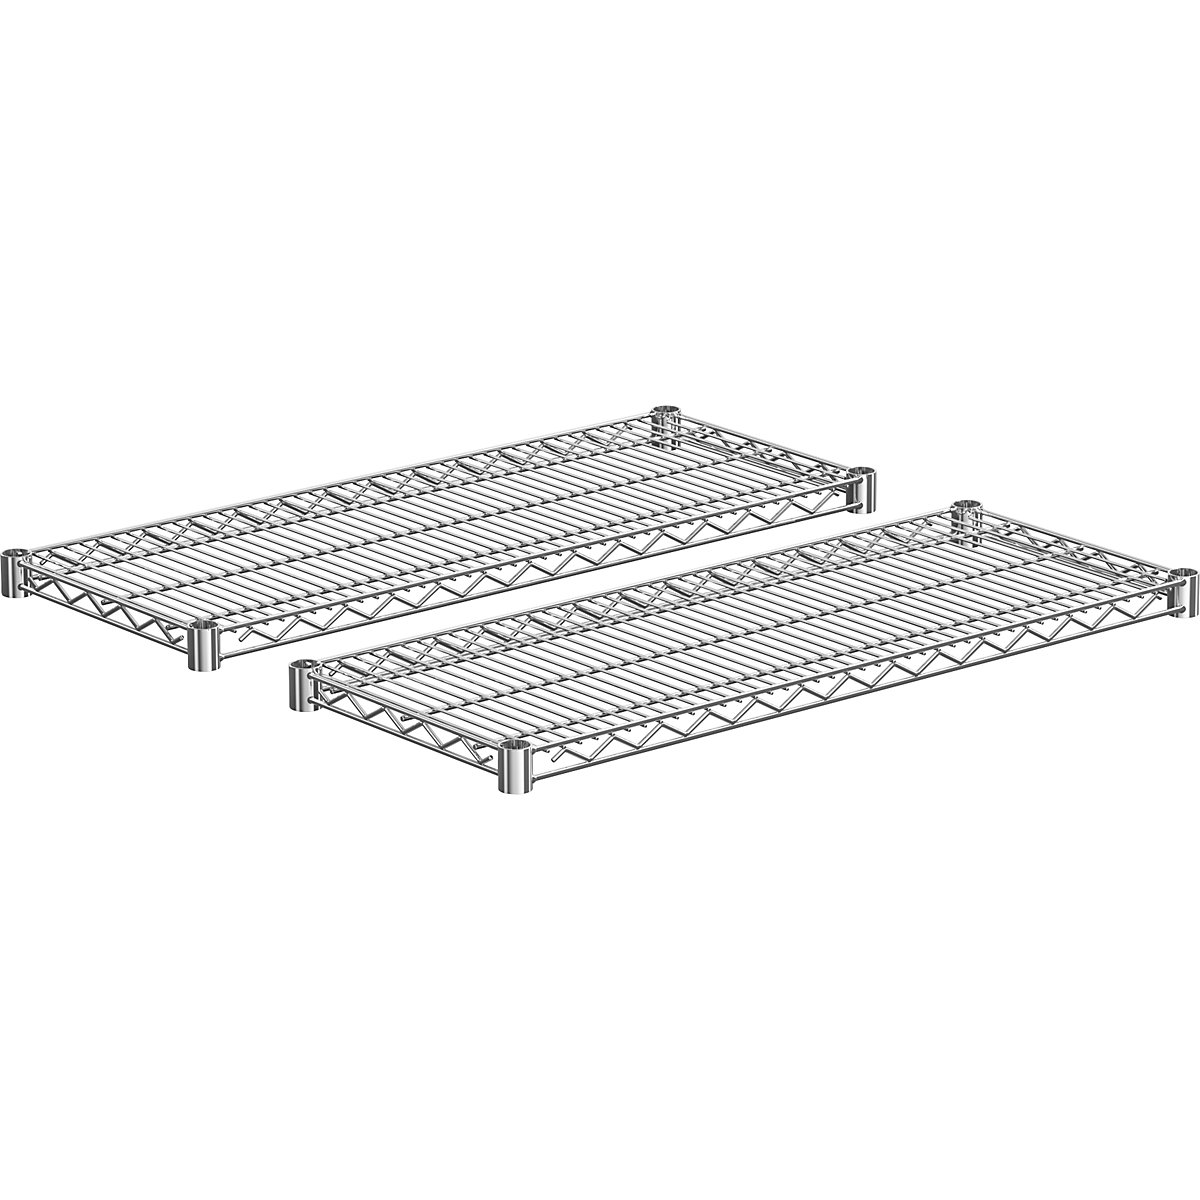 Shelf for steel mesh shelf unit, chrome plated